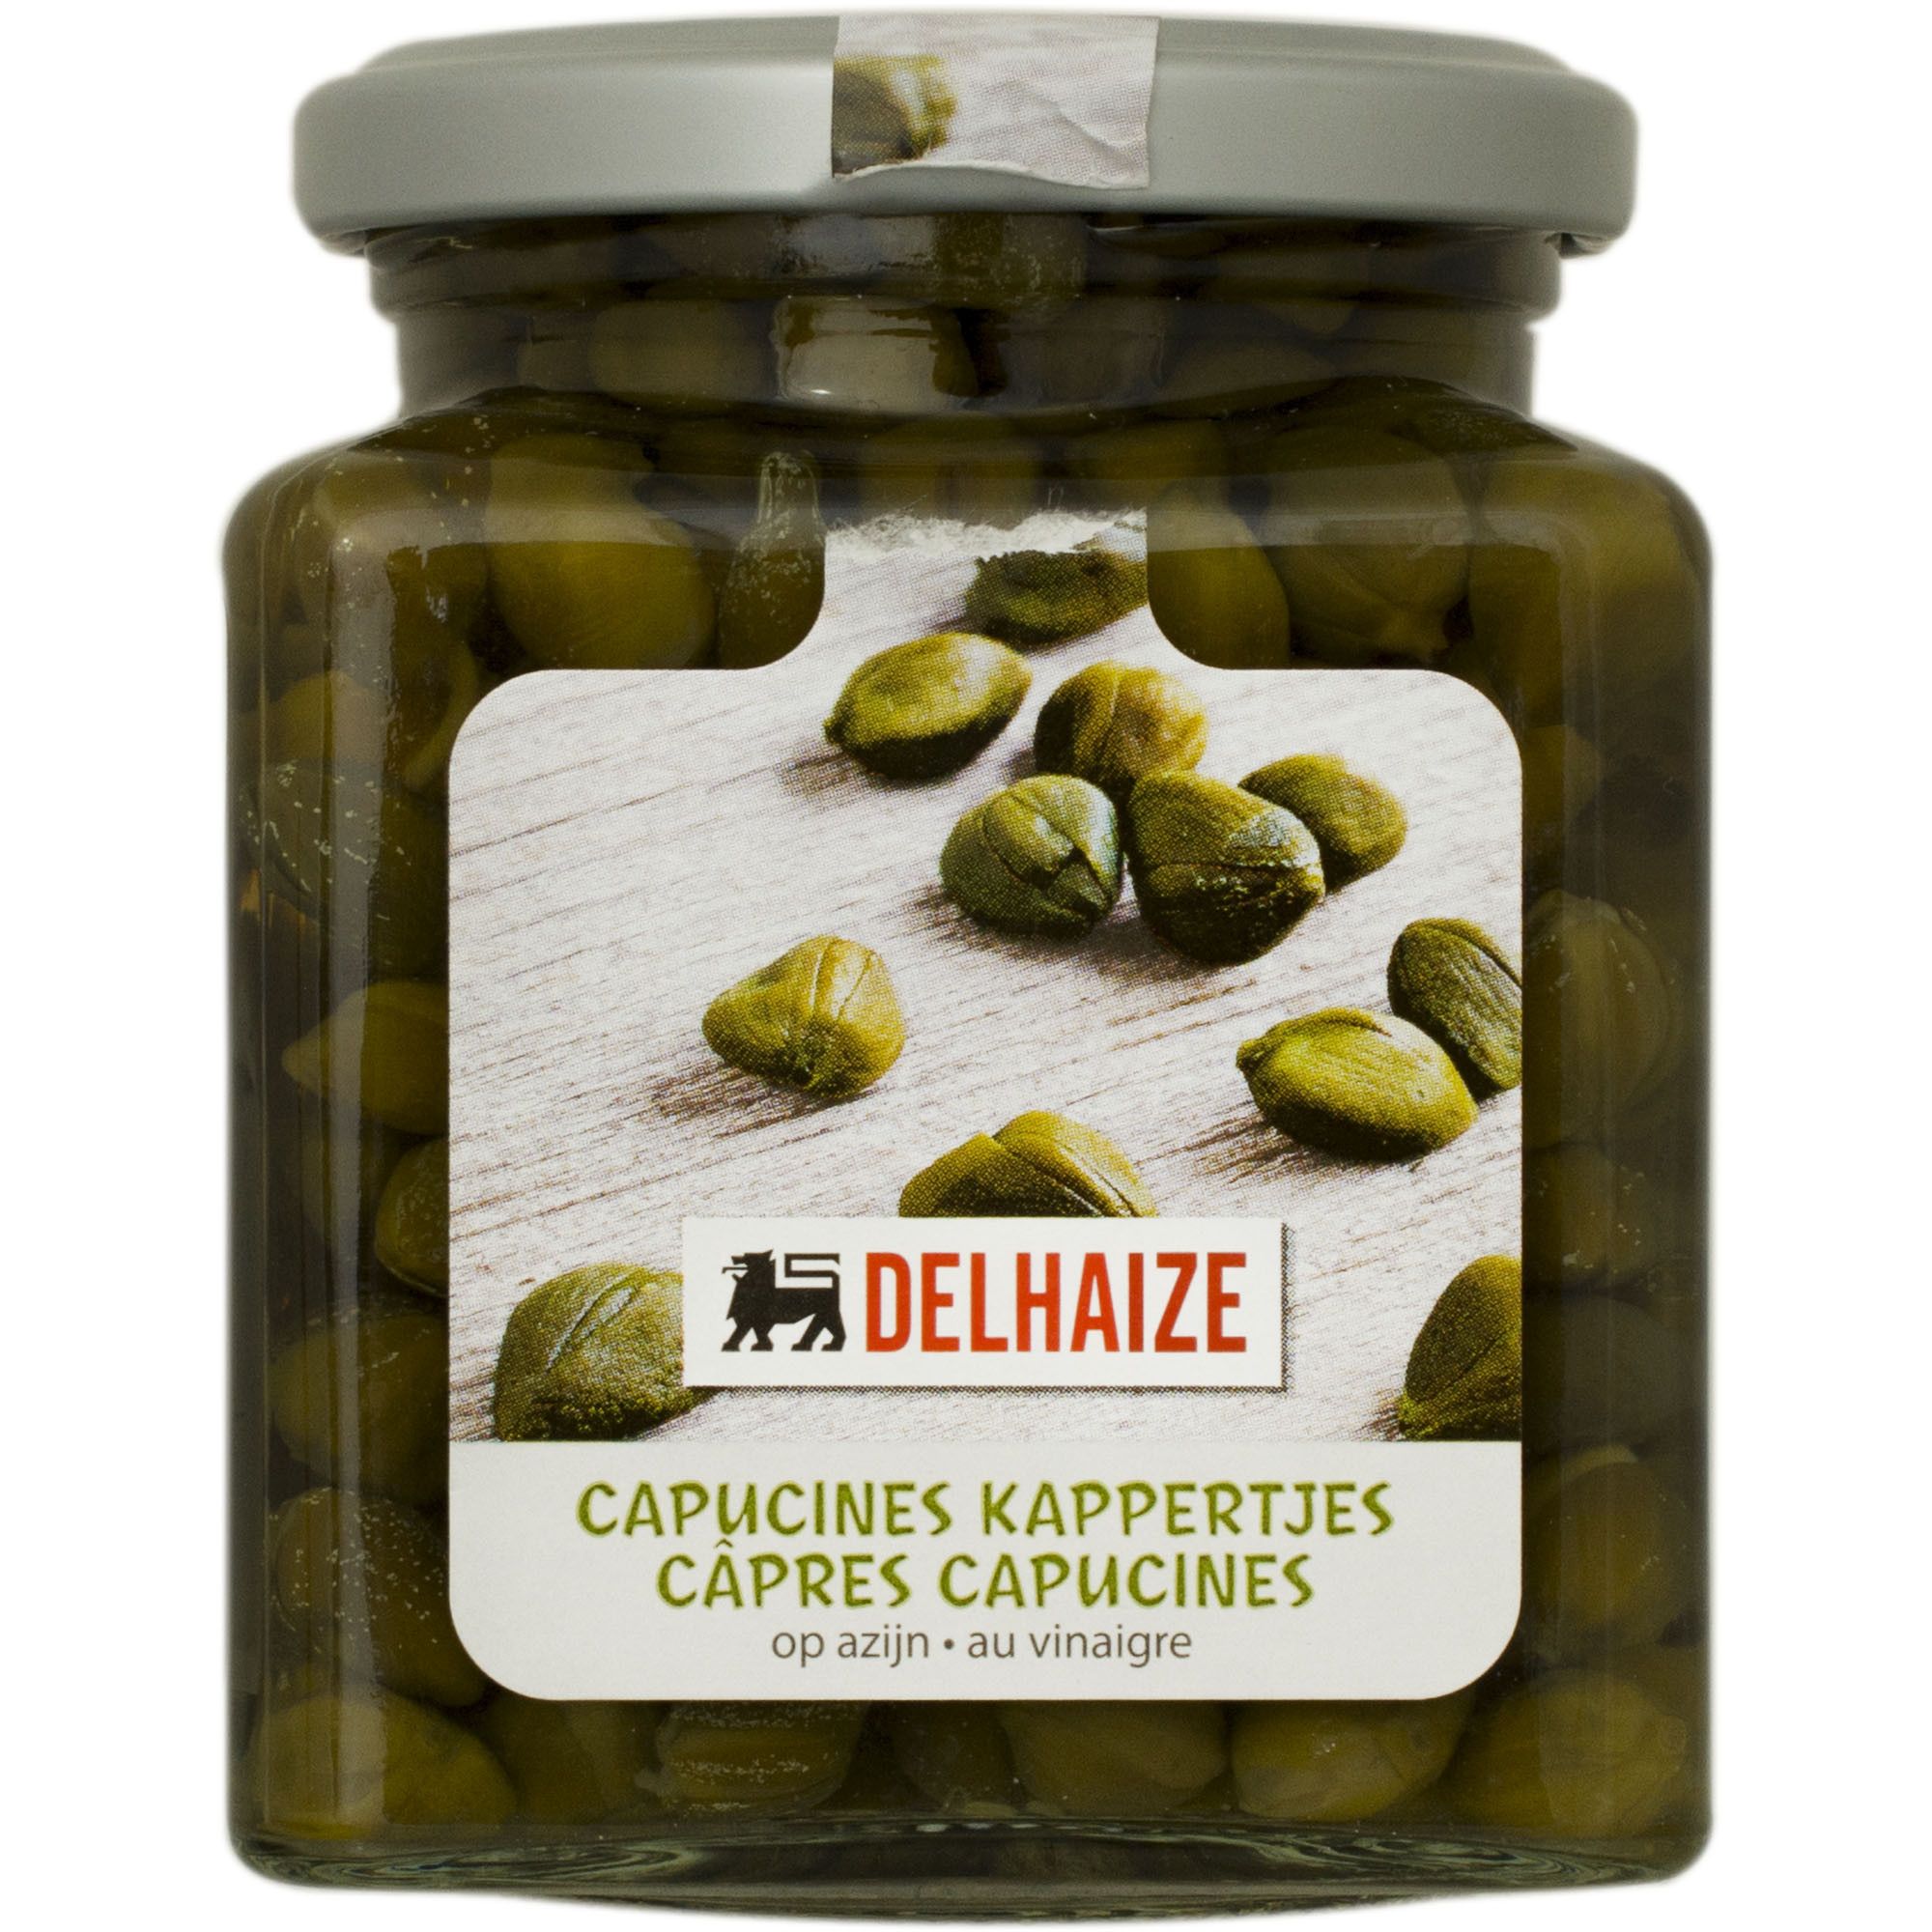 Capere Capucine, Delhaize